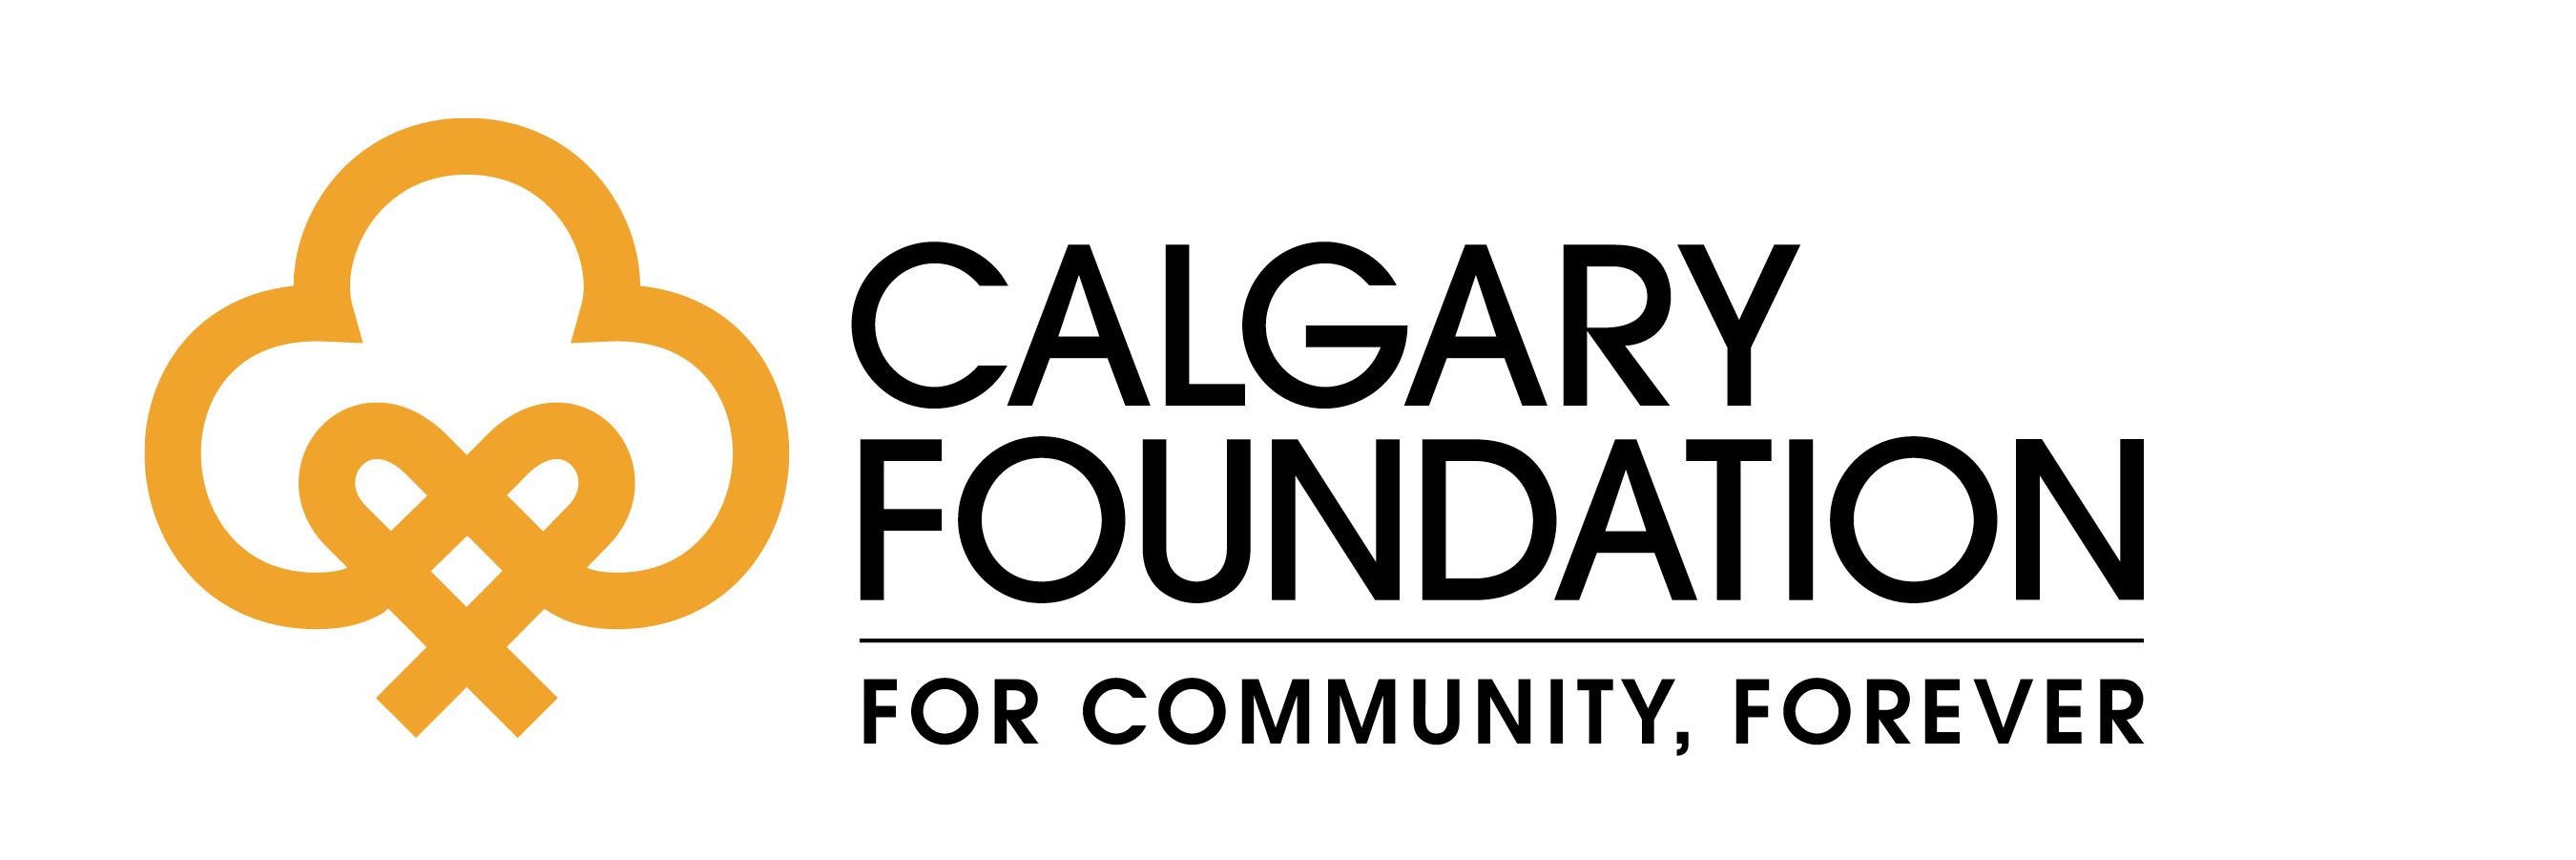 calgary-foundation-logo---larger-tagline-rgb.jpg